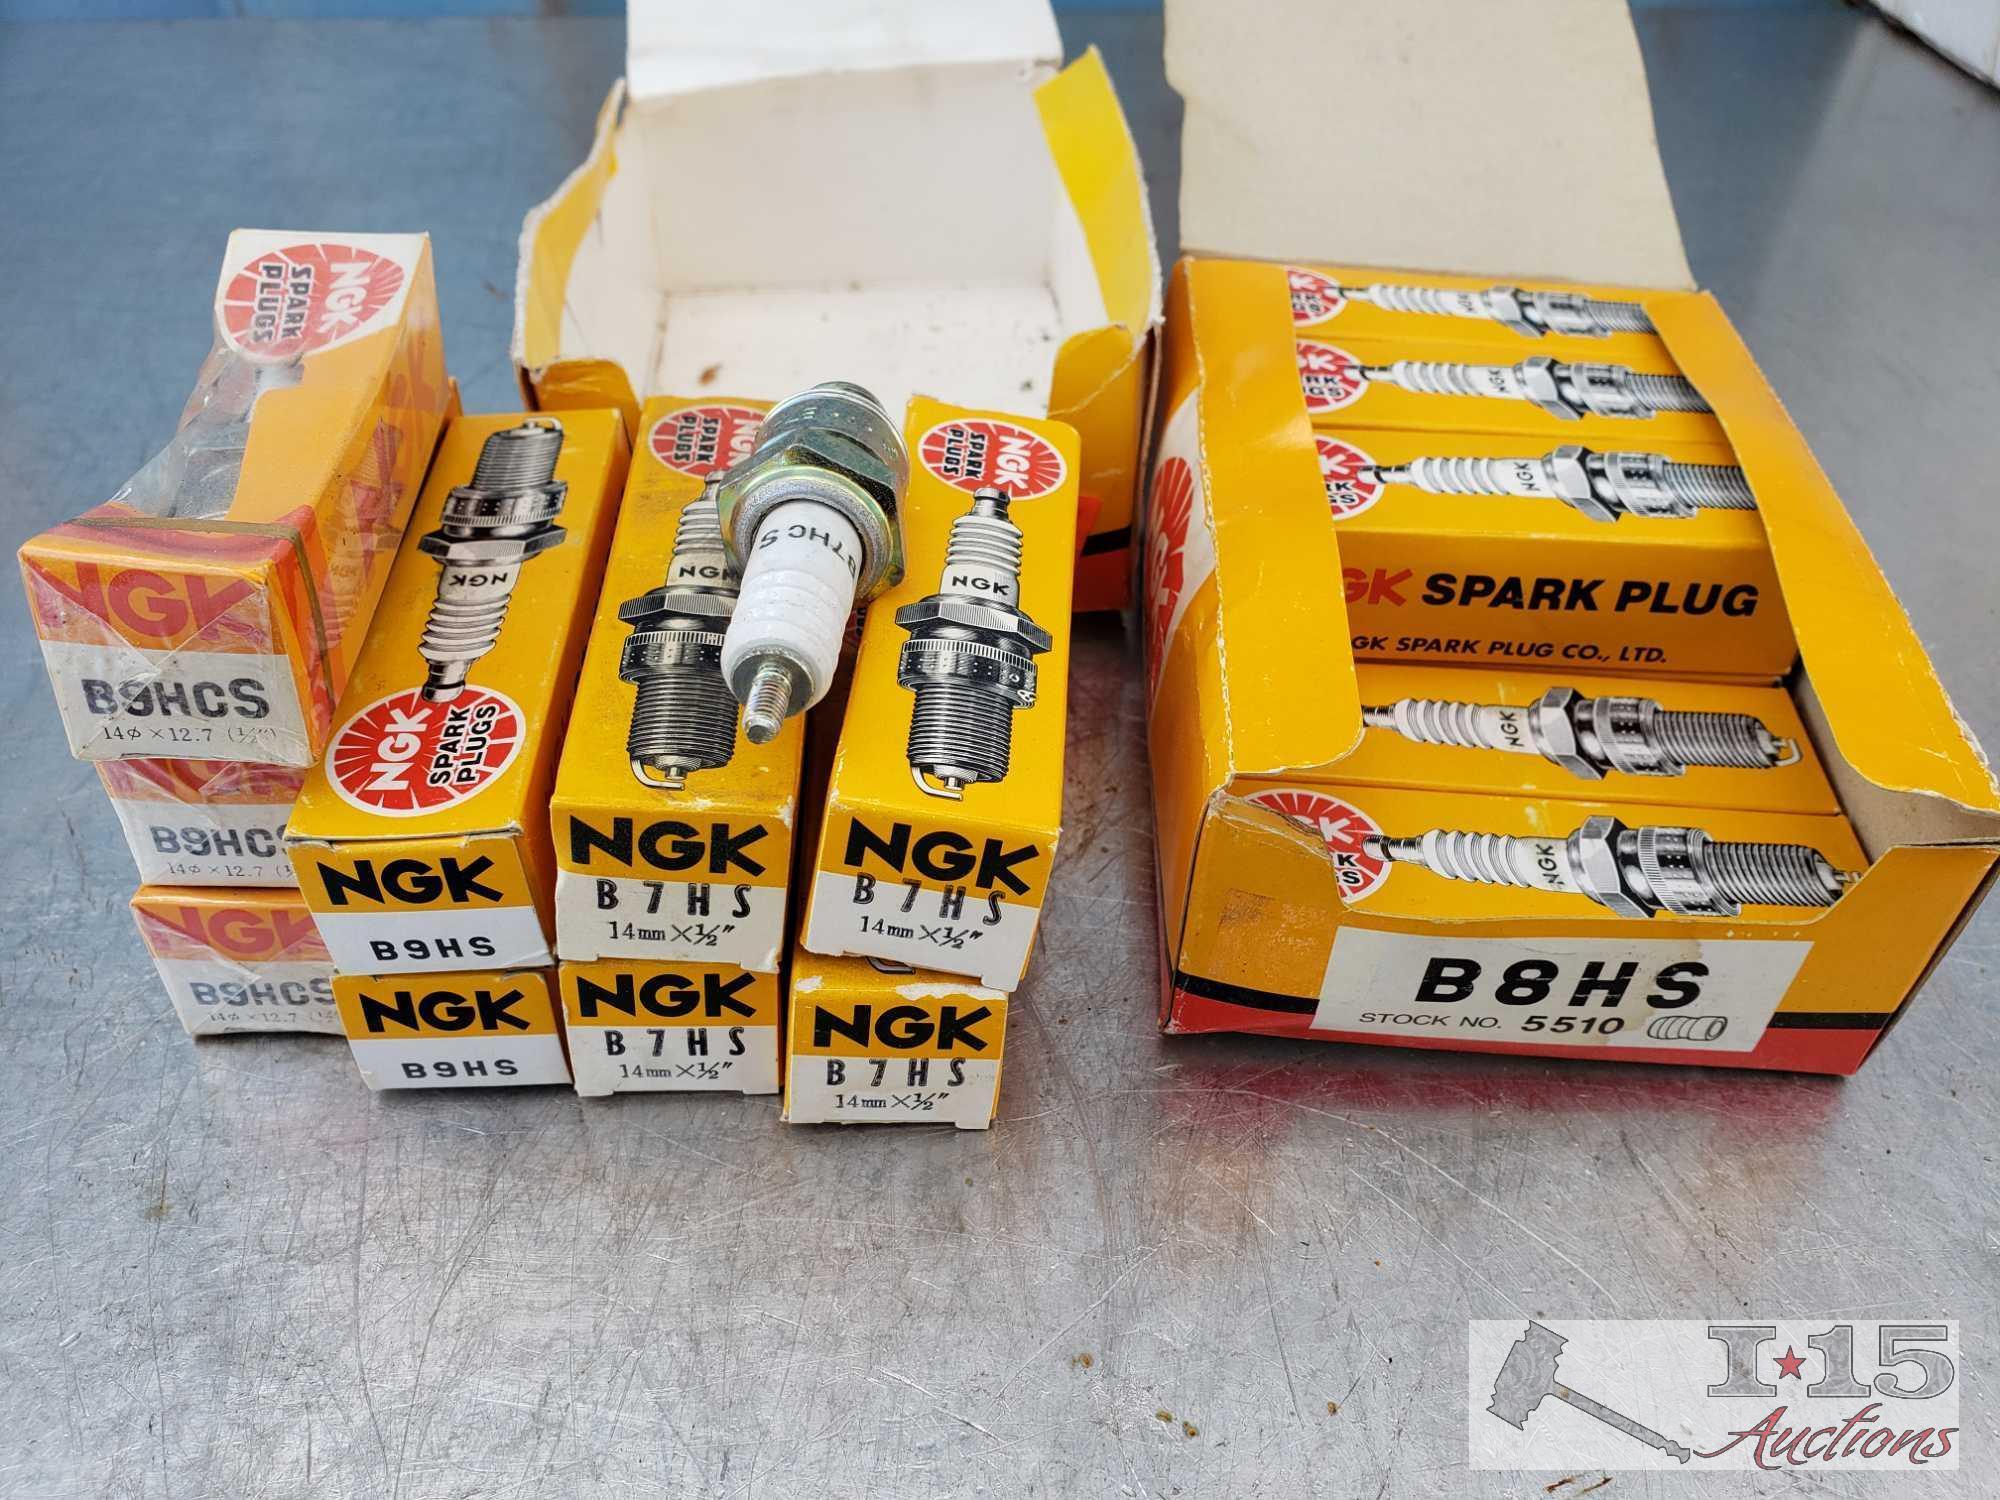 16 NGK Spark Plugs, B8HS, B7HS, B9HS, and B9HCS